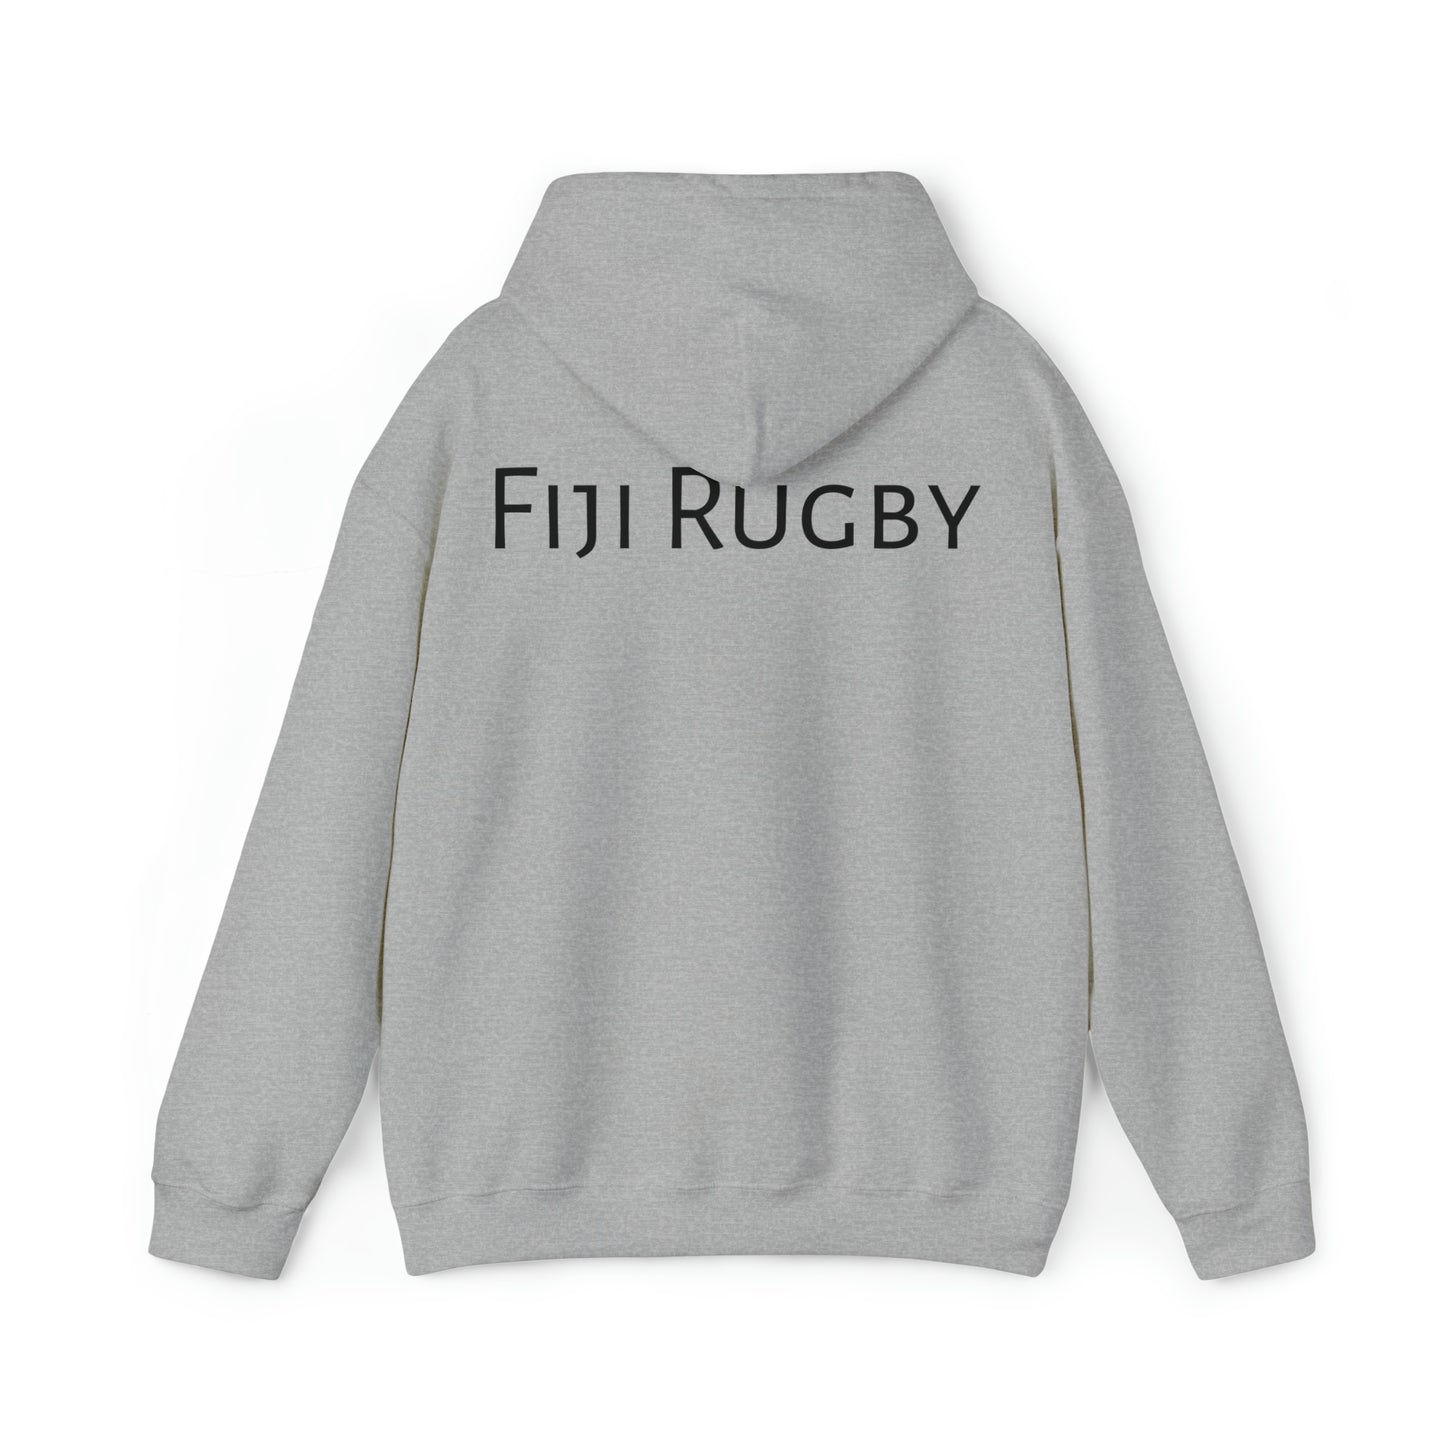 Ready Fiji - light hoodies